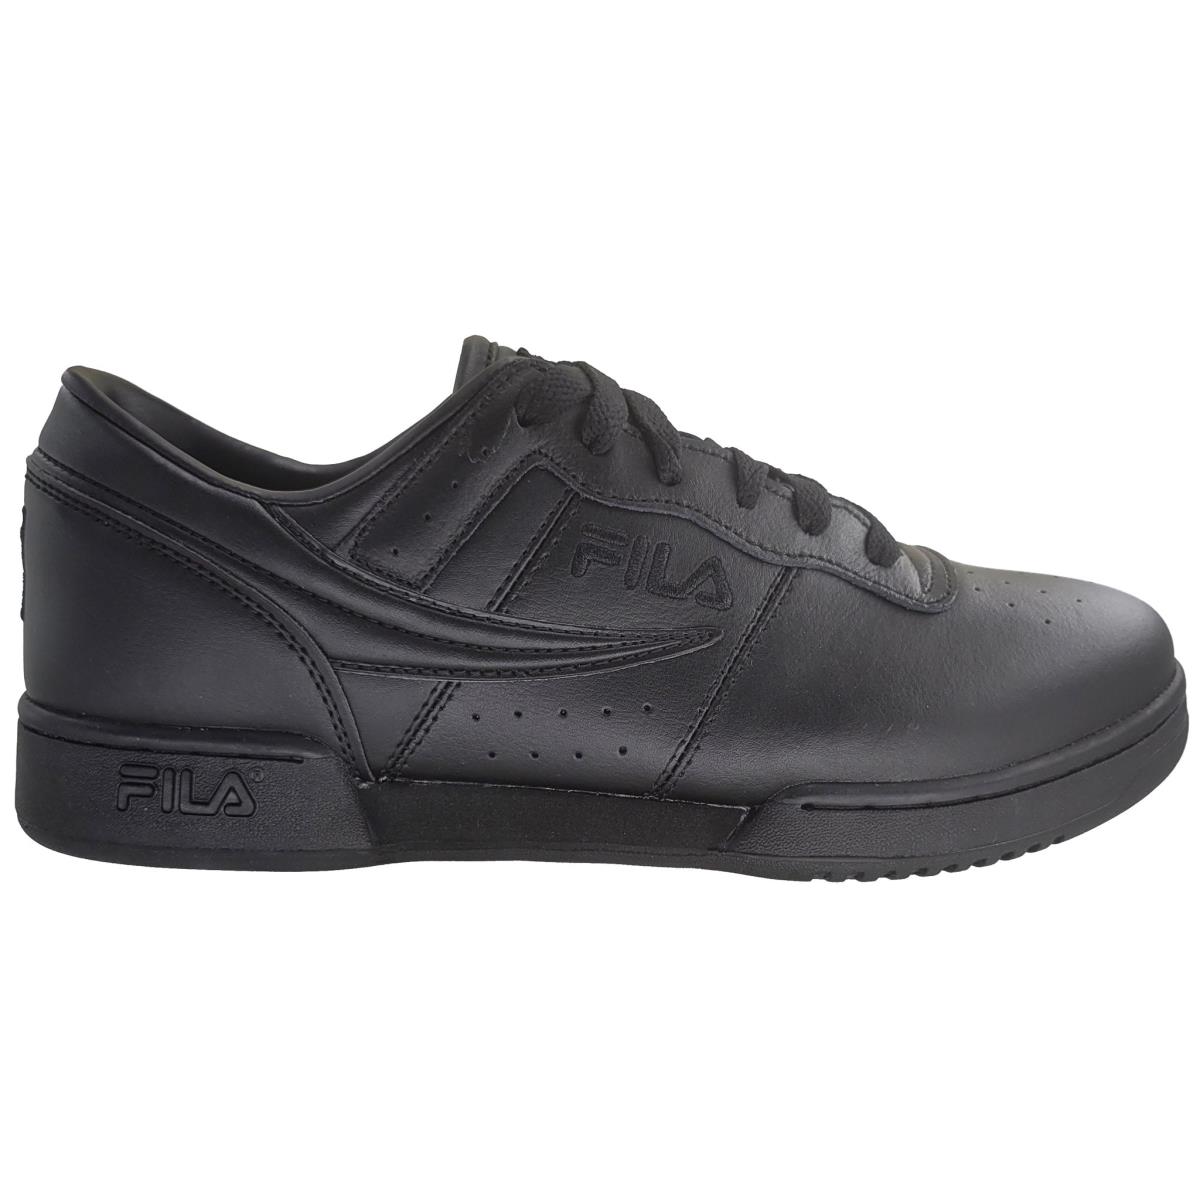 Fila Men`s Fitness White Black Retro Casual Athletic Sneakers Shoes Black